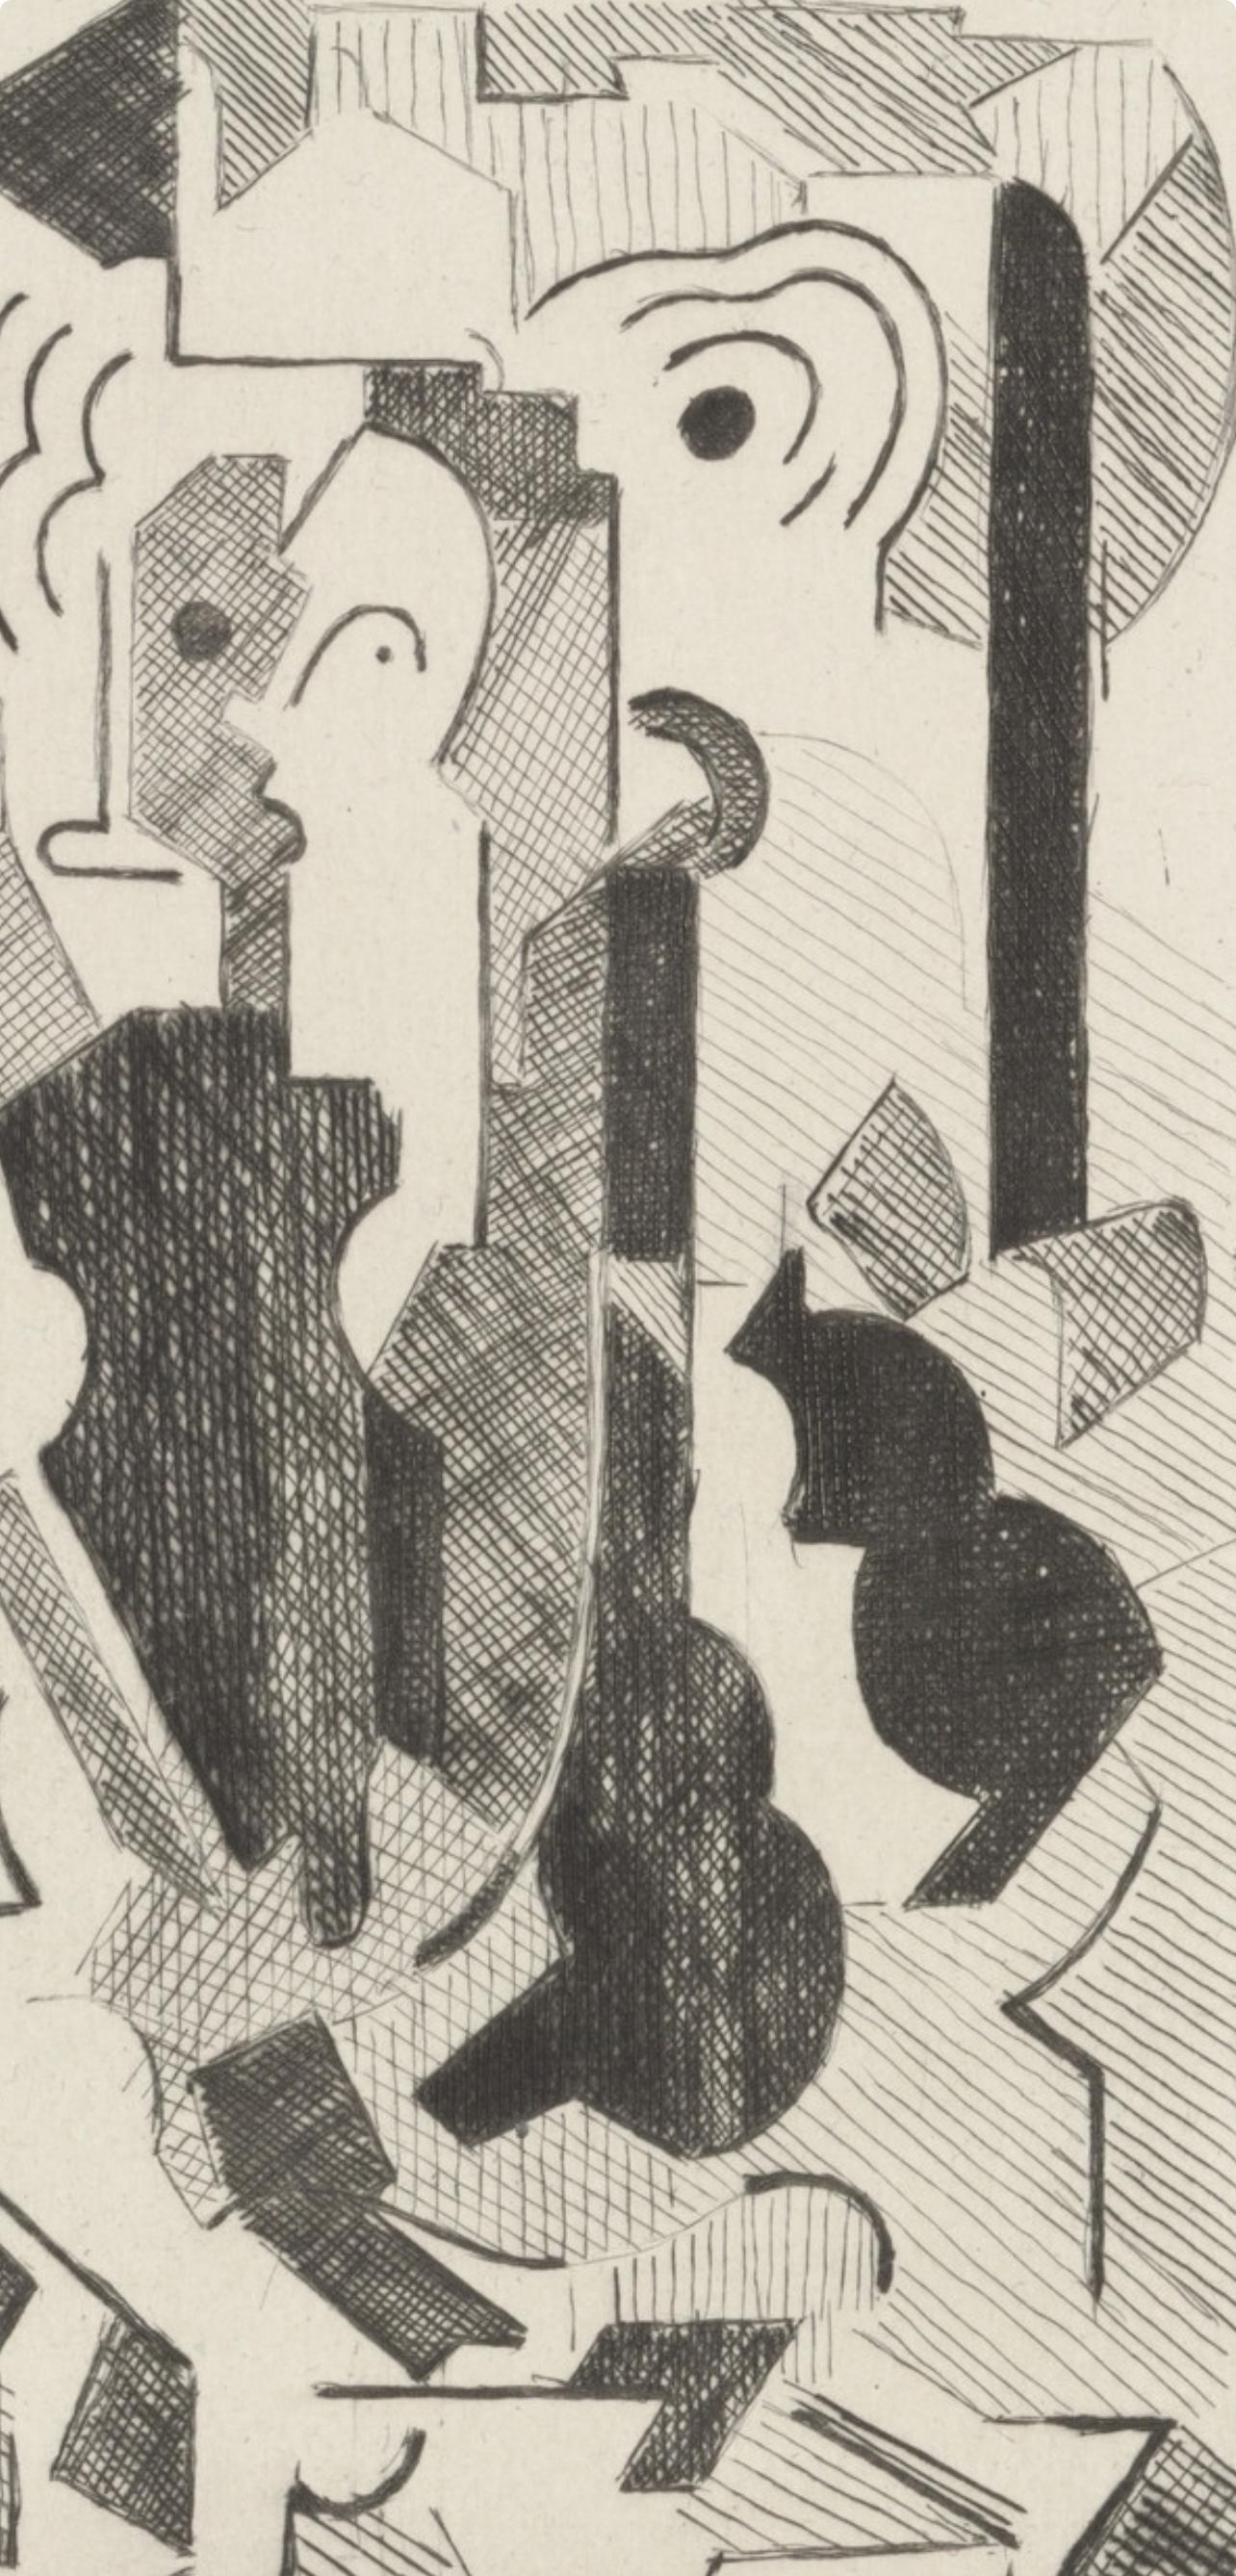 Gleizes, Composition, Du cubisme (after) - Modern Print by Albert Gleizes